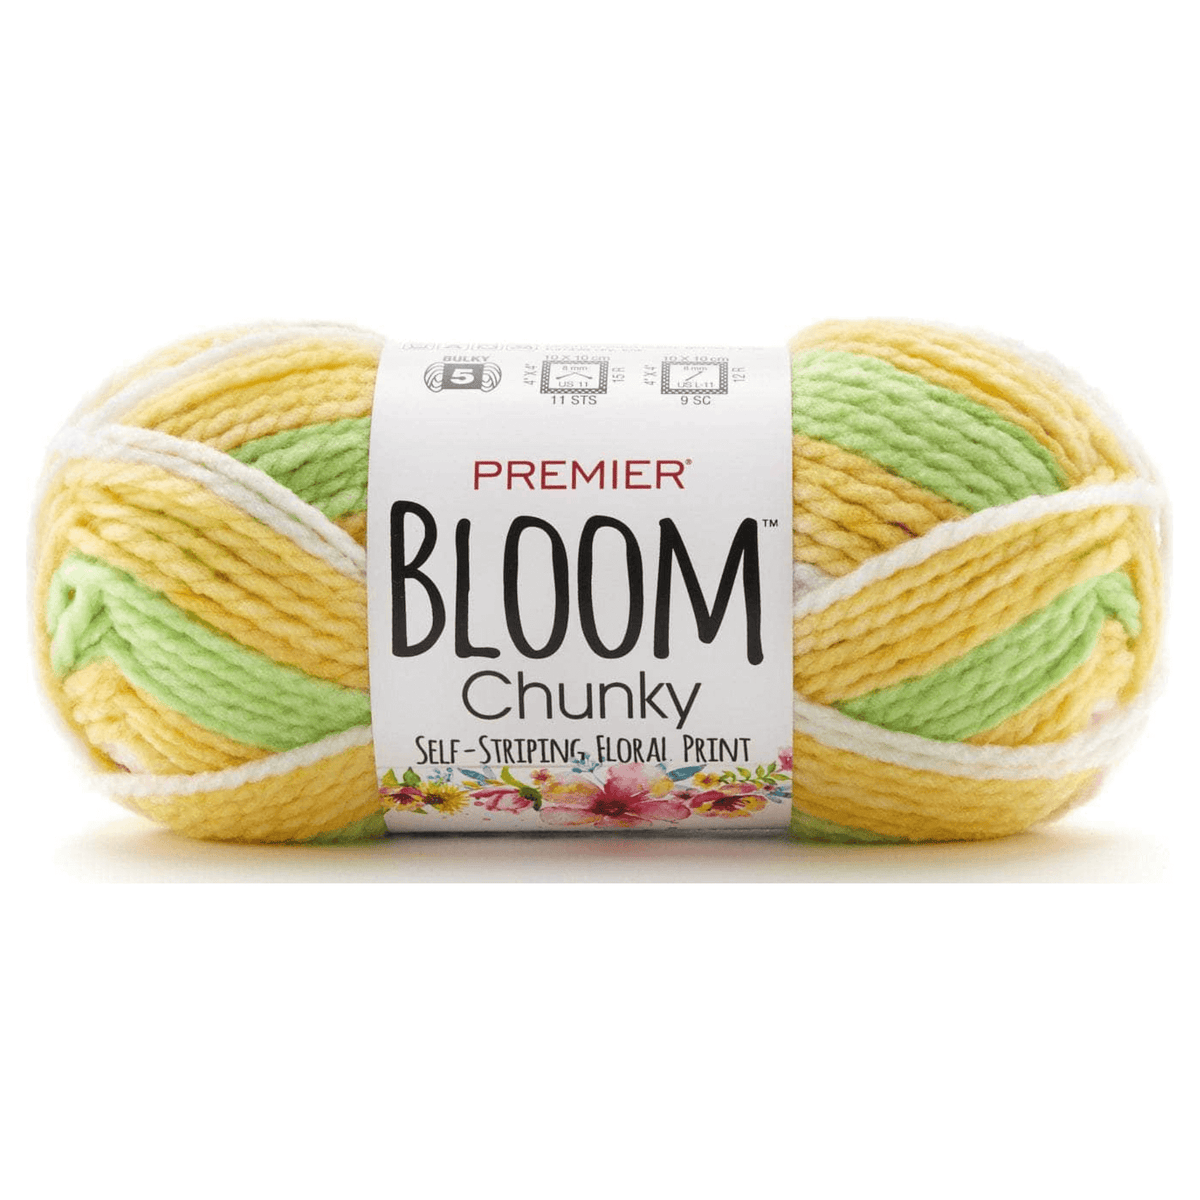 Premier Bloom Chunky Yarn